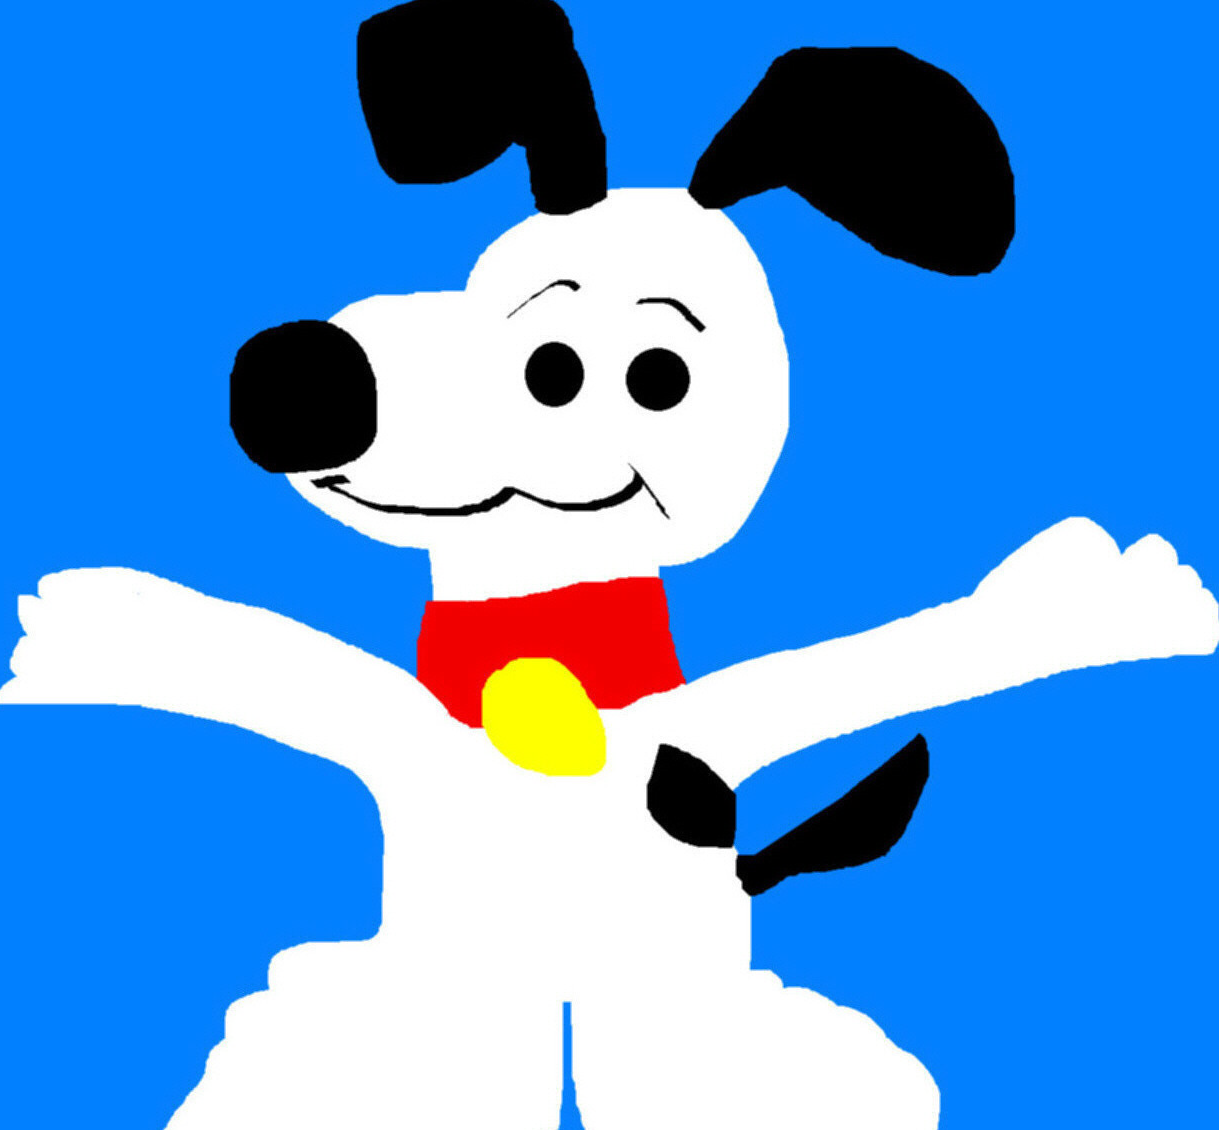 Snoopy MS Paint by Falconlobo